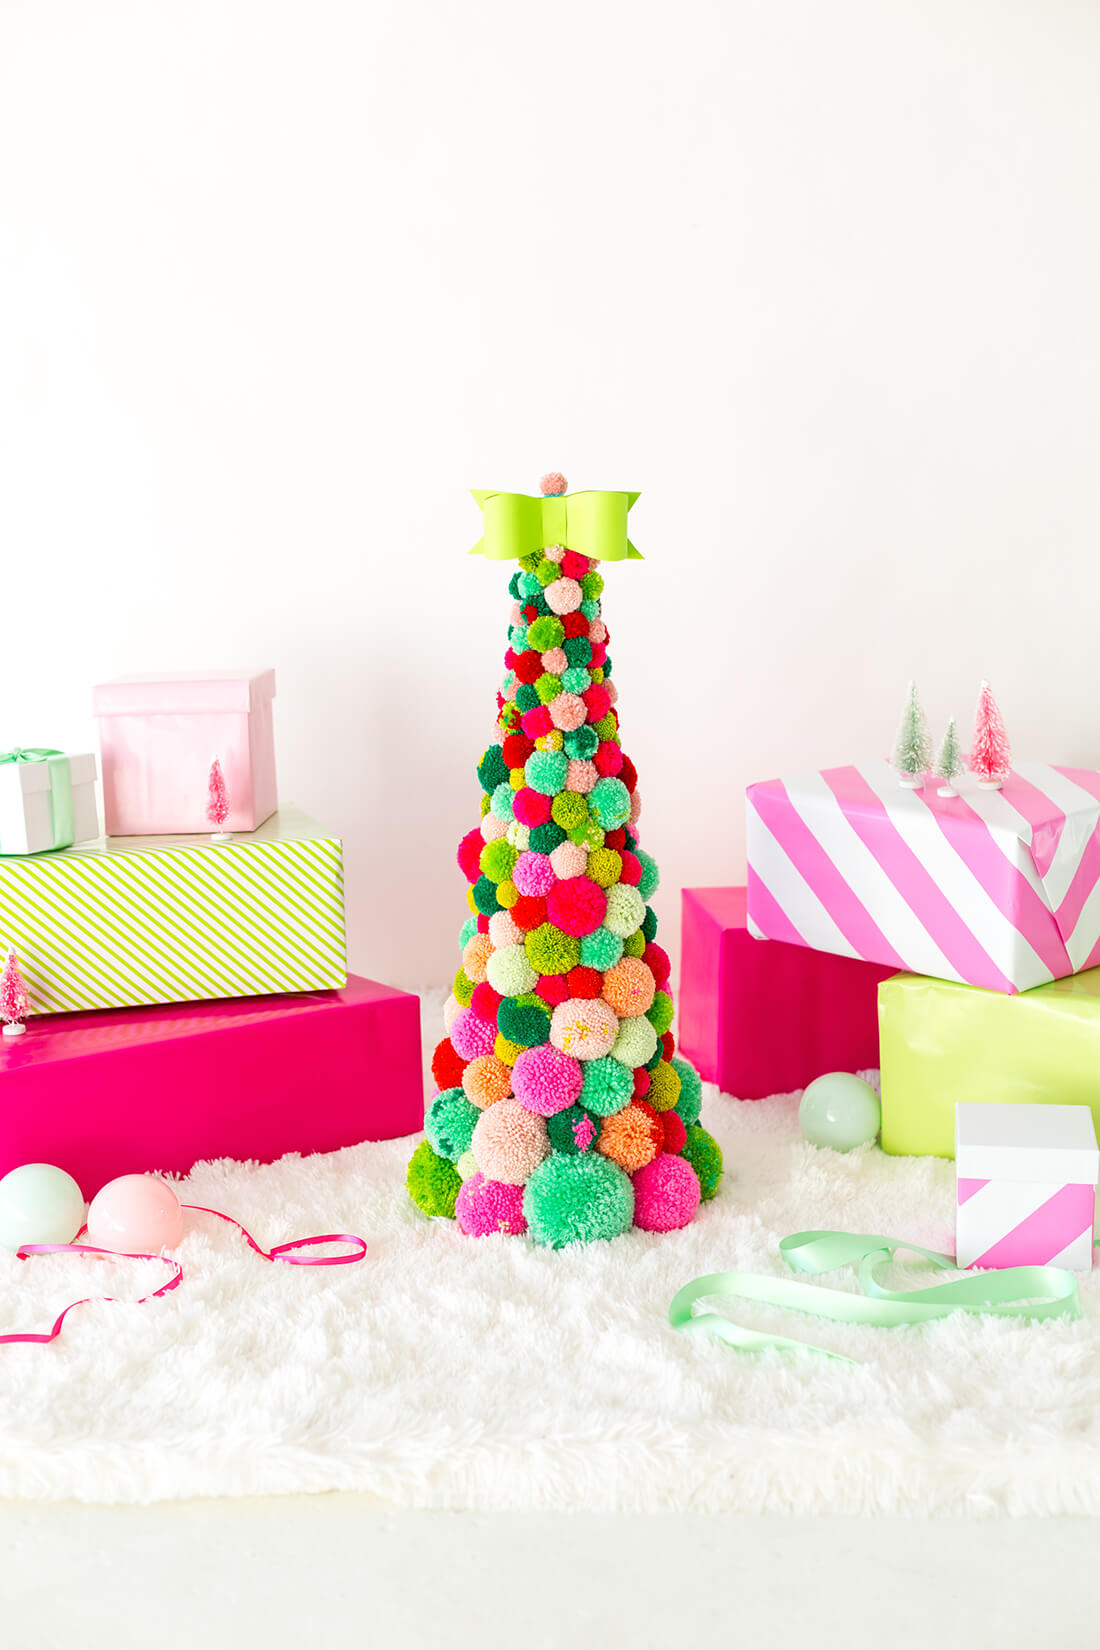 Easy To Make Pom Pom Christmas Tree Craft At Home